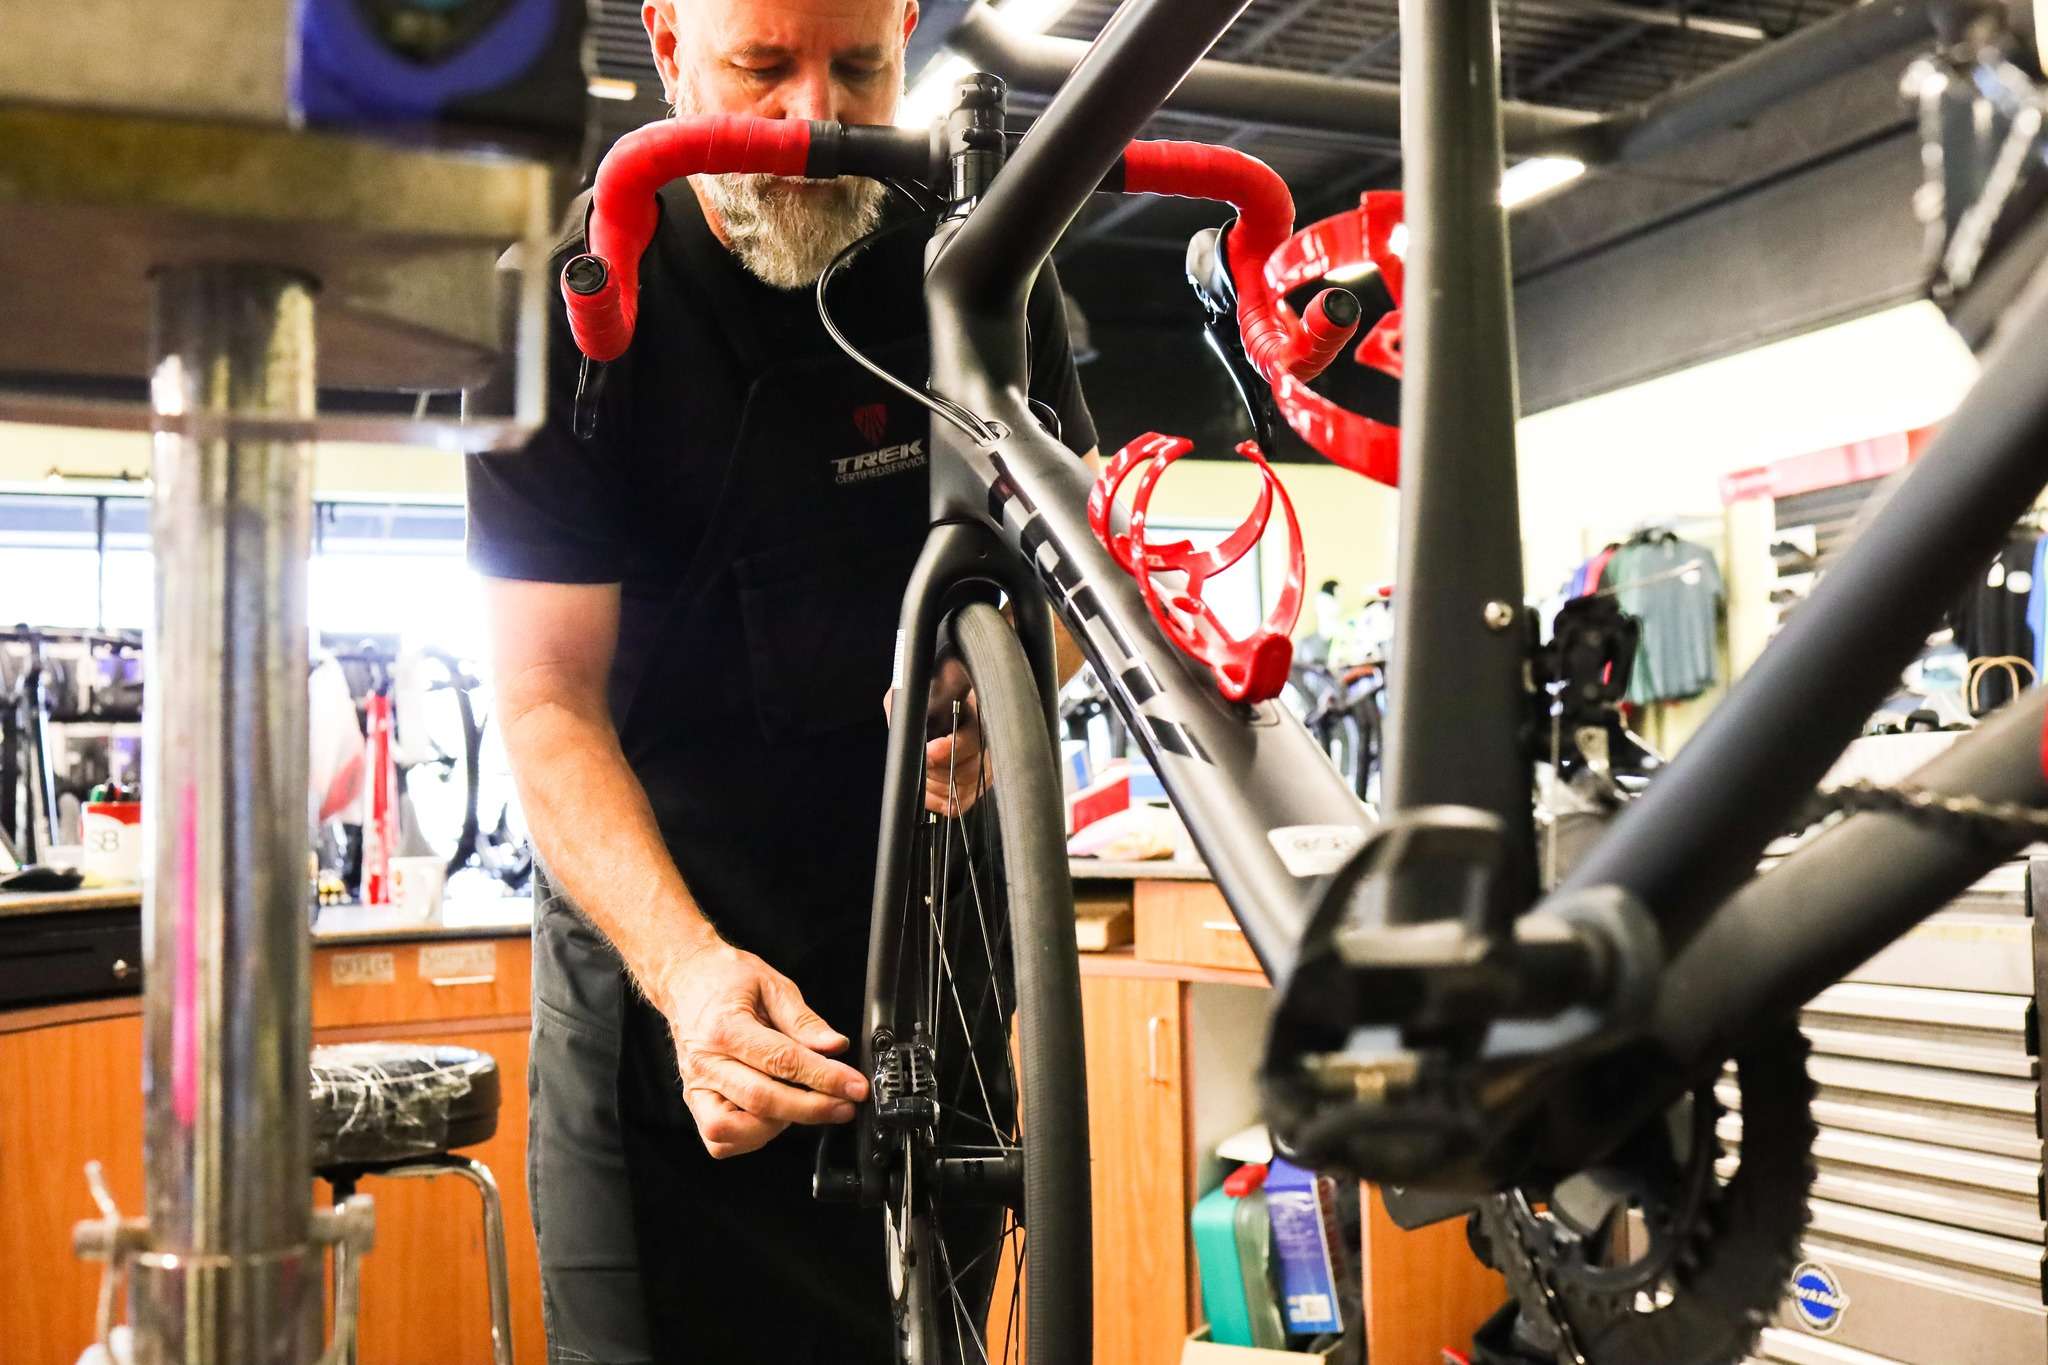 Our mechanic, Matt, working on a bike in the shop.